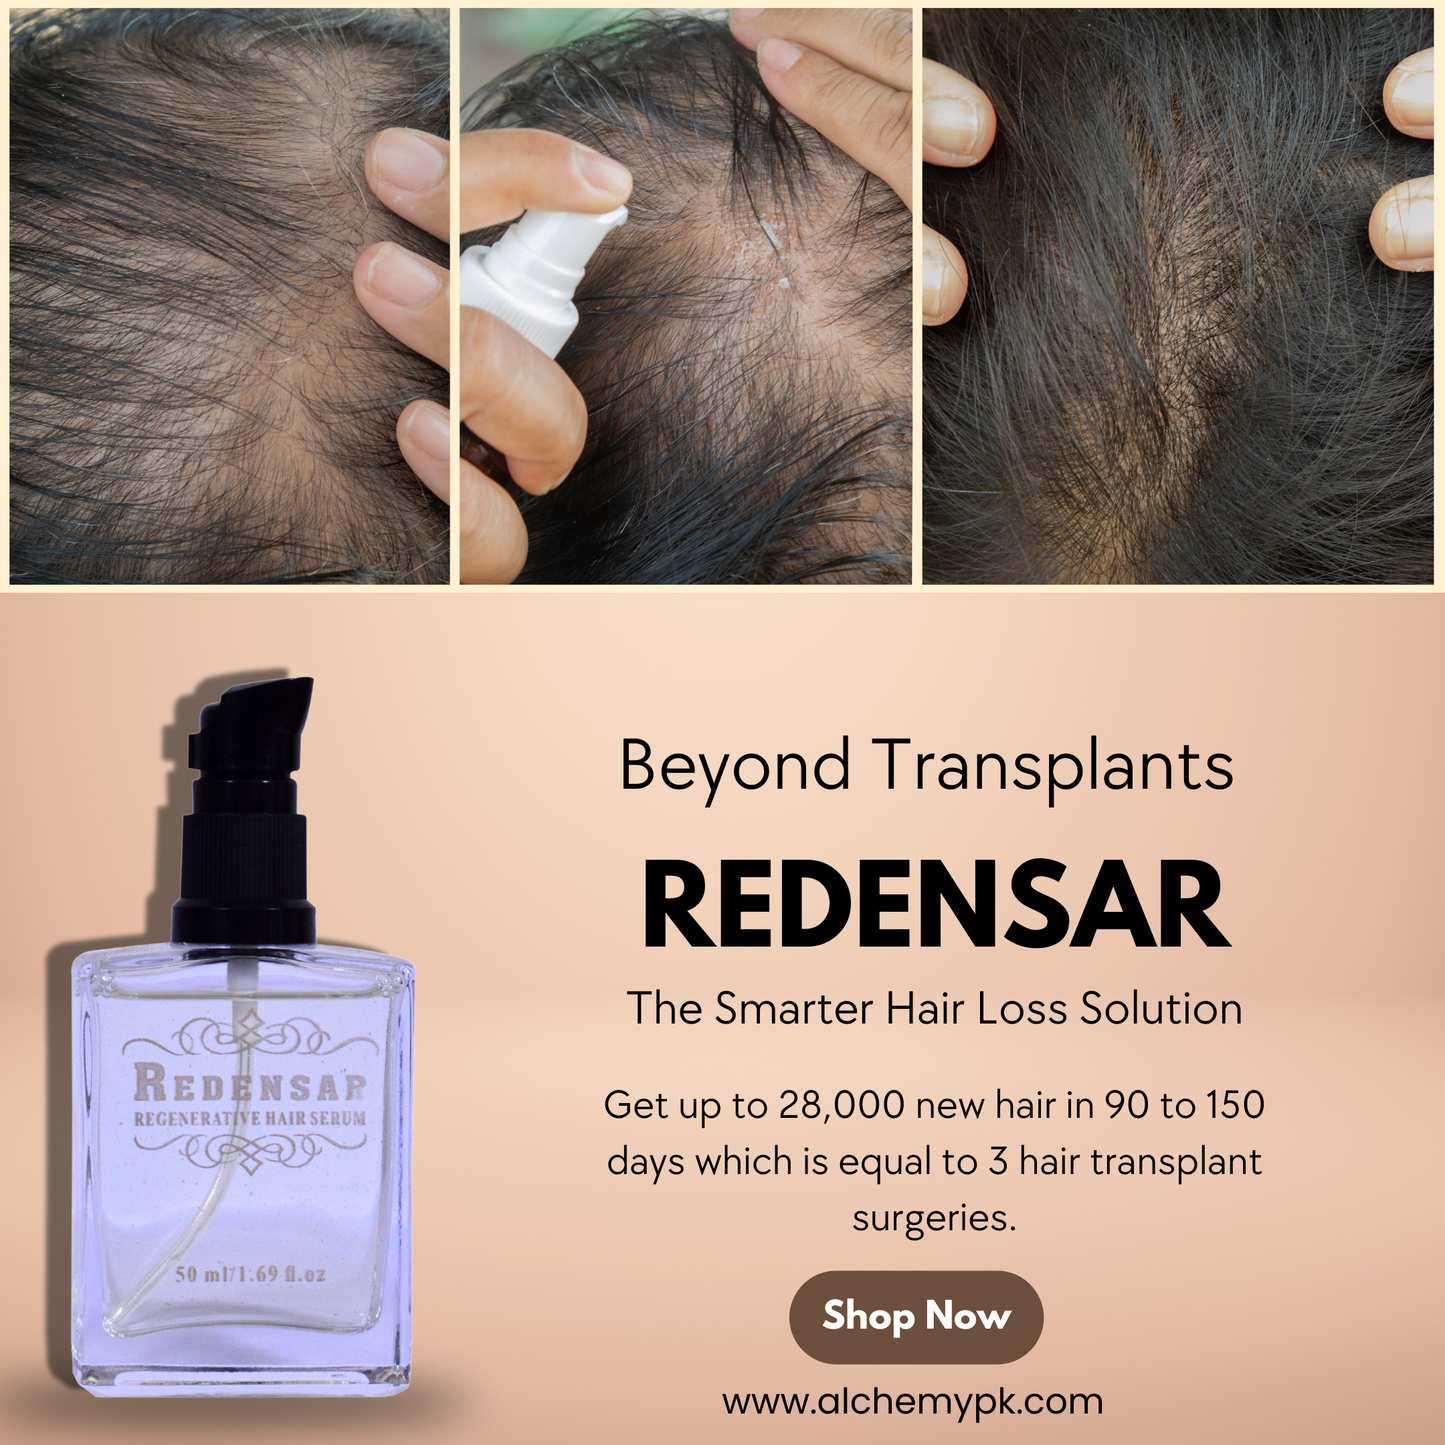 REDENSAR Regenerative Hair Serum